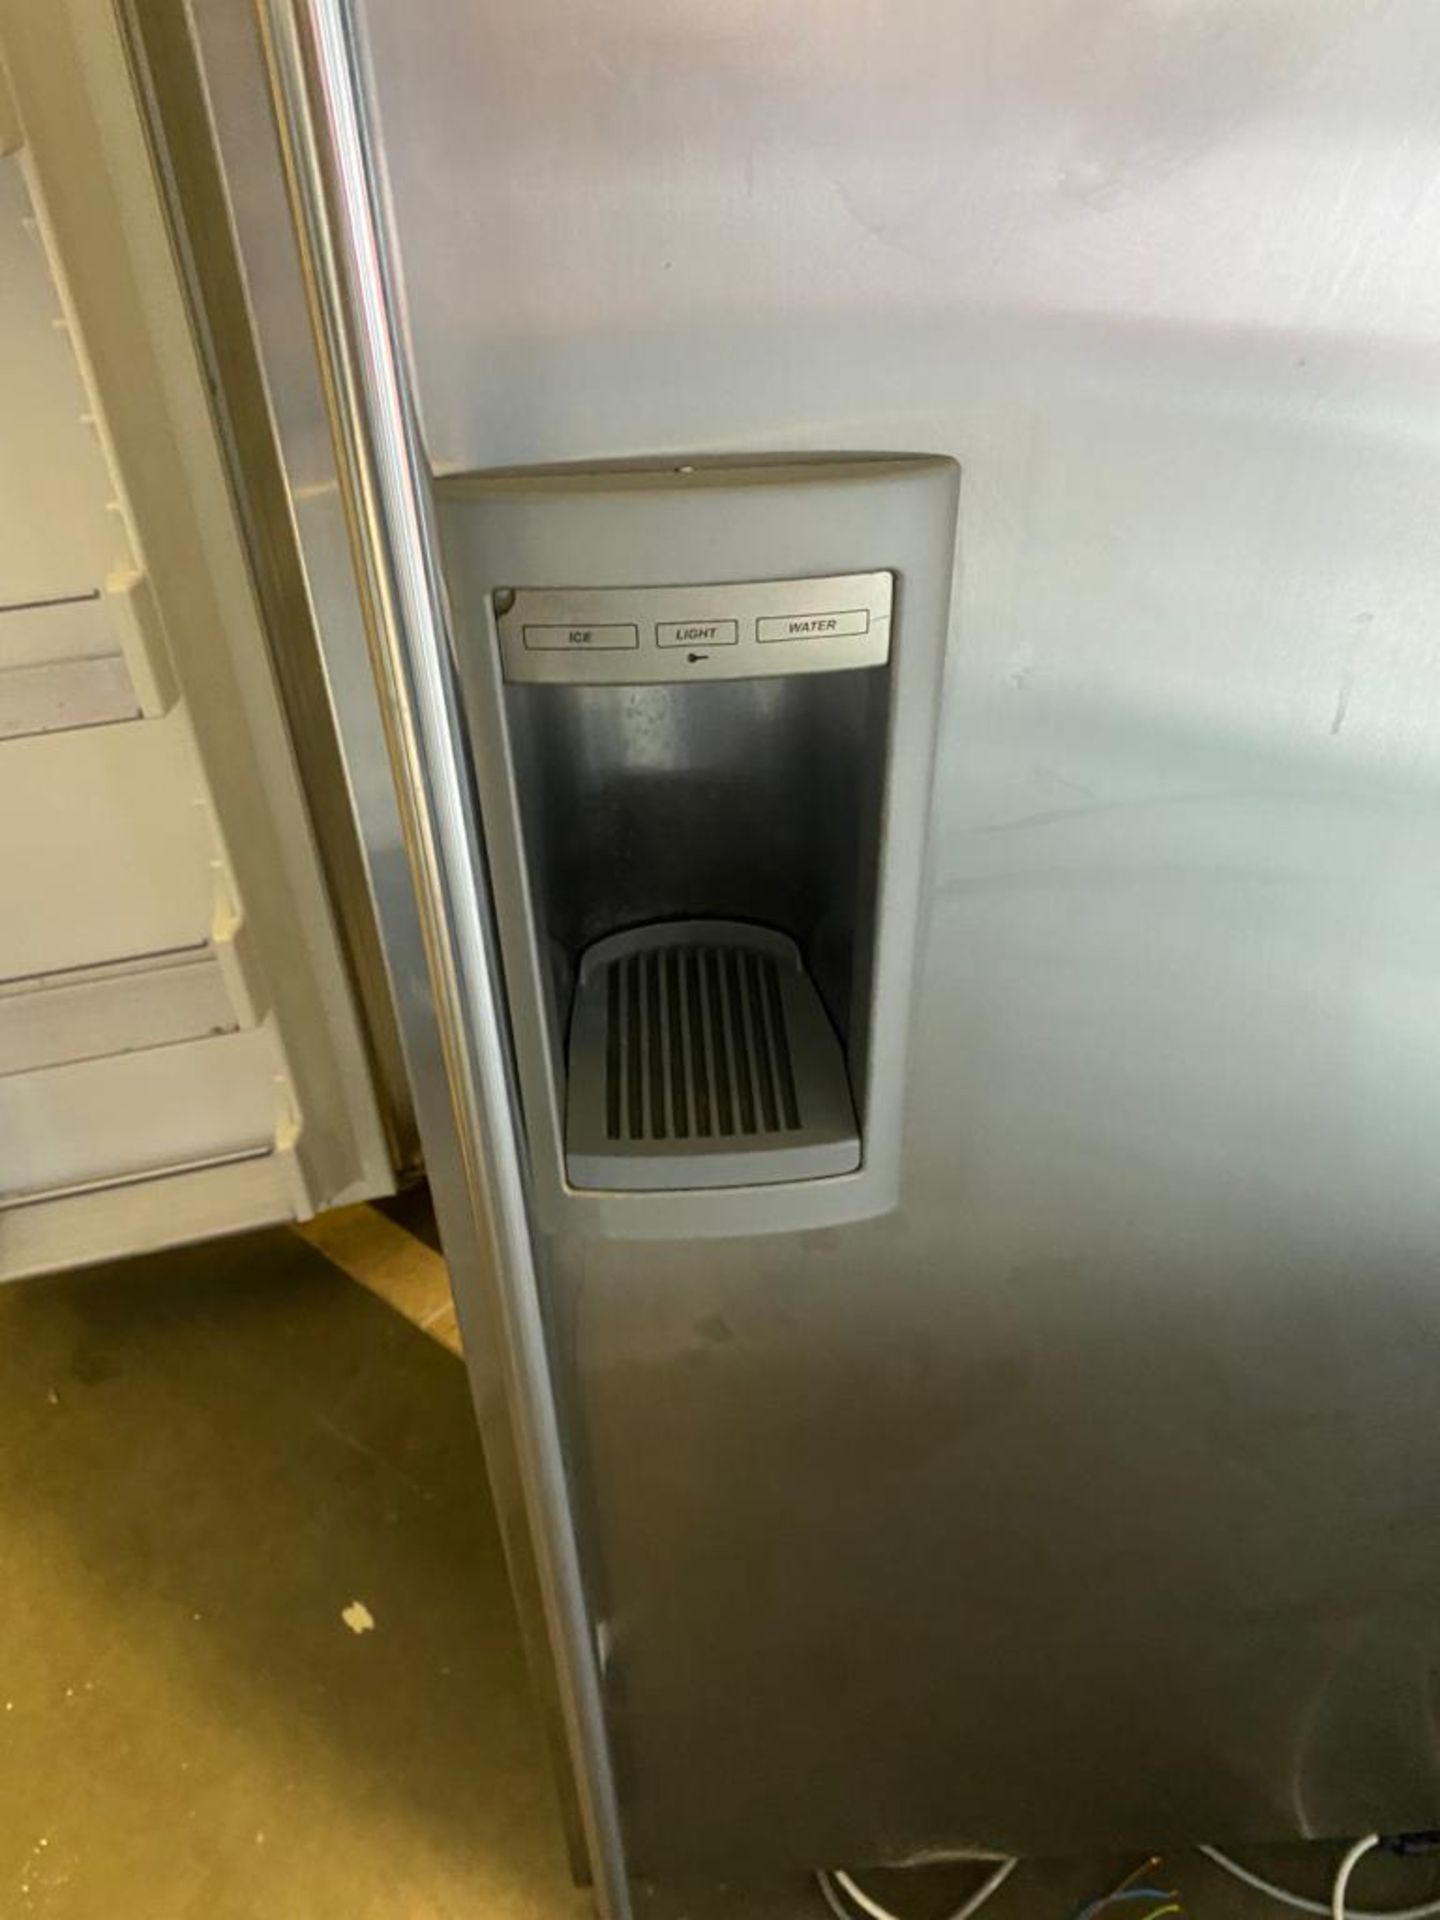 1 x Subzero 695 American Style Fridge Freezer With Ice and Water Dispenser - Image 3 of 4